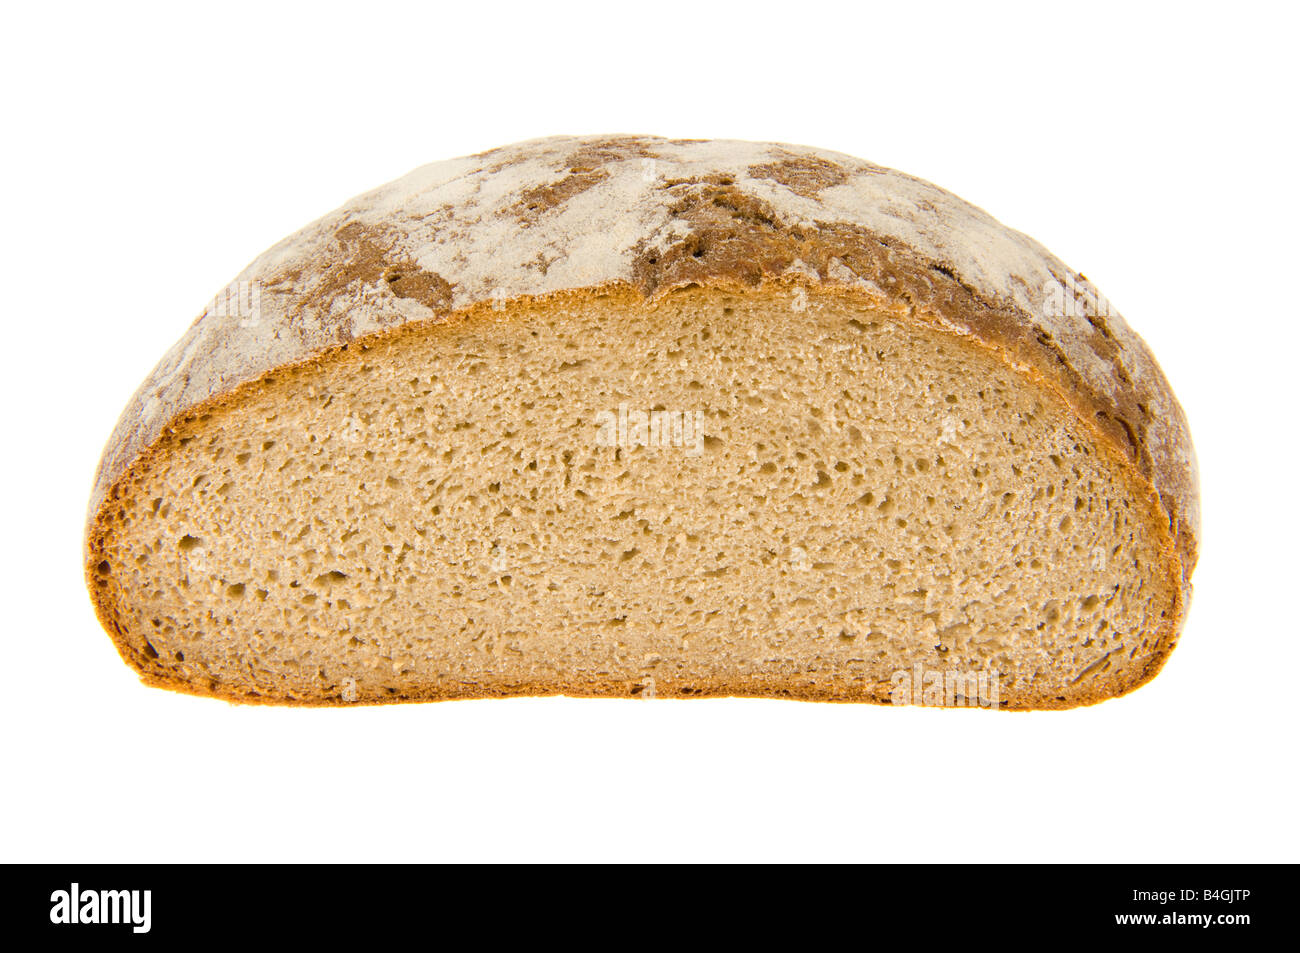 Alimentos dietéticos pan marrón oscuro pan de centeno alemán Alemania brot baker levadura de panadería sourdough cob rodaja de pan losa redonda Foto de stock